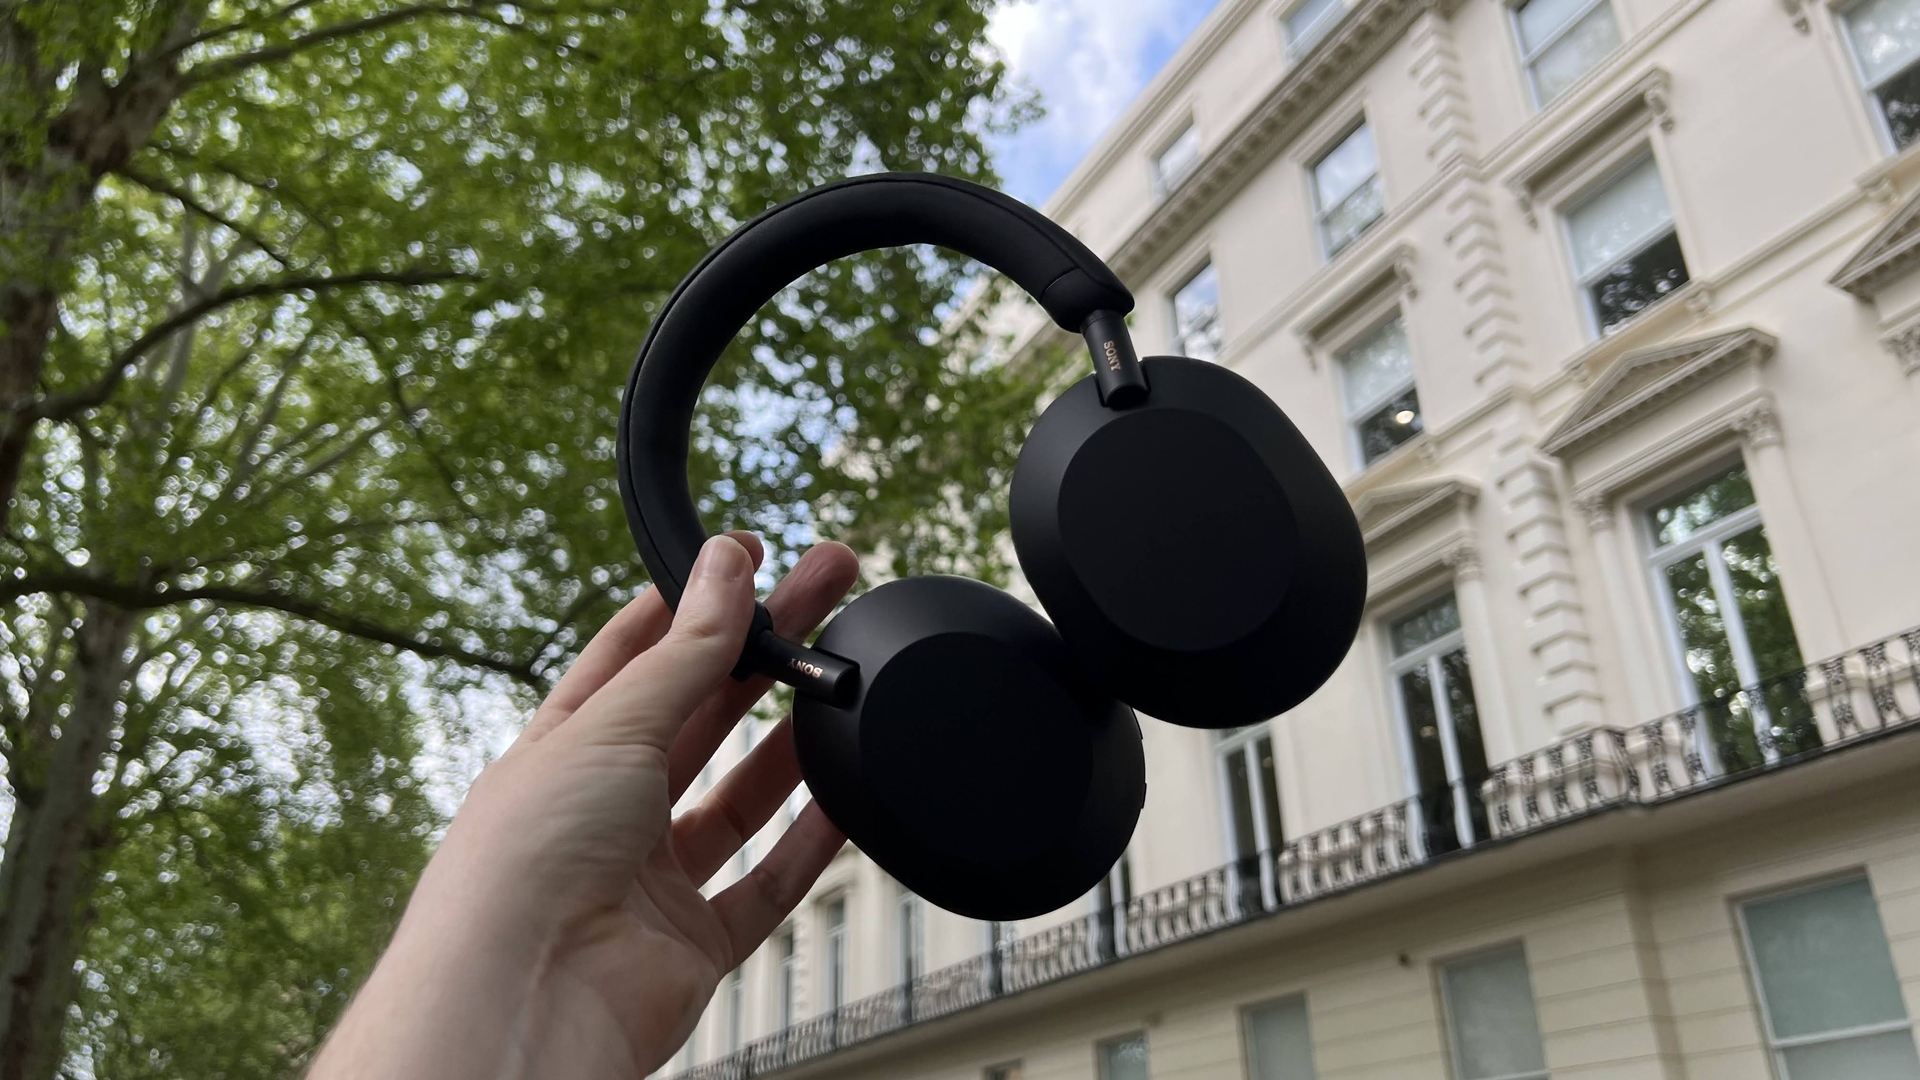 Sony WH-1000XM5 Noise Canceling Headphones